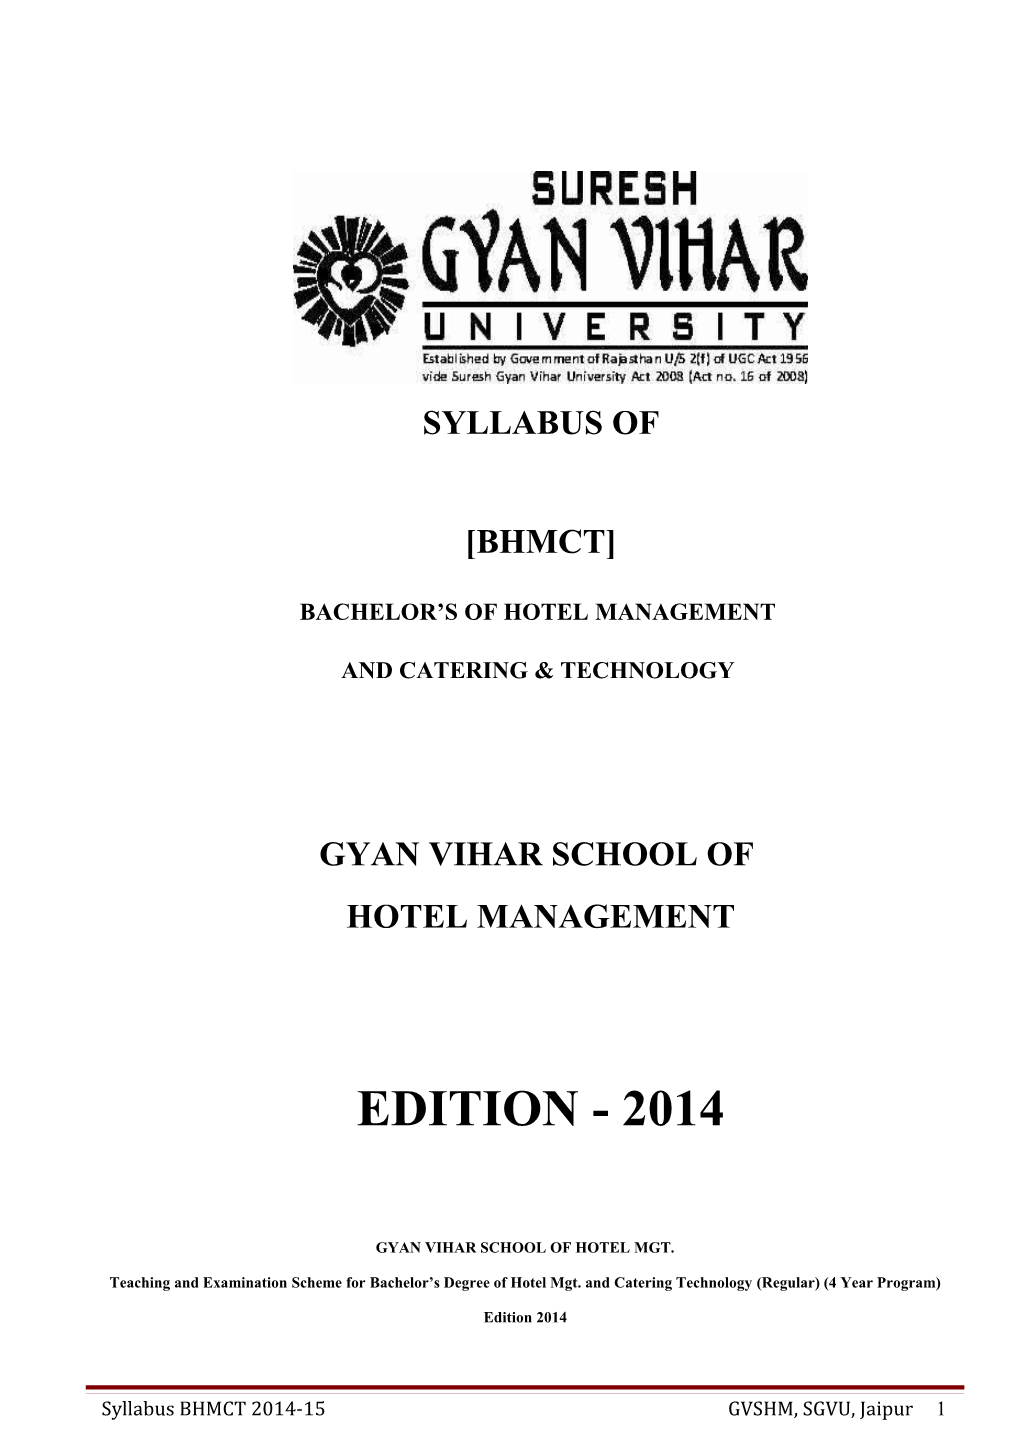 Gyan Vihar School of Hotel Mgt